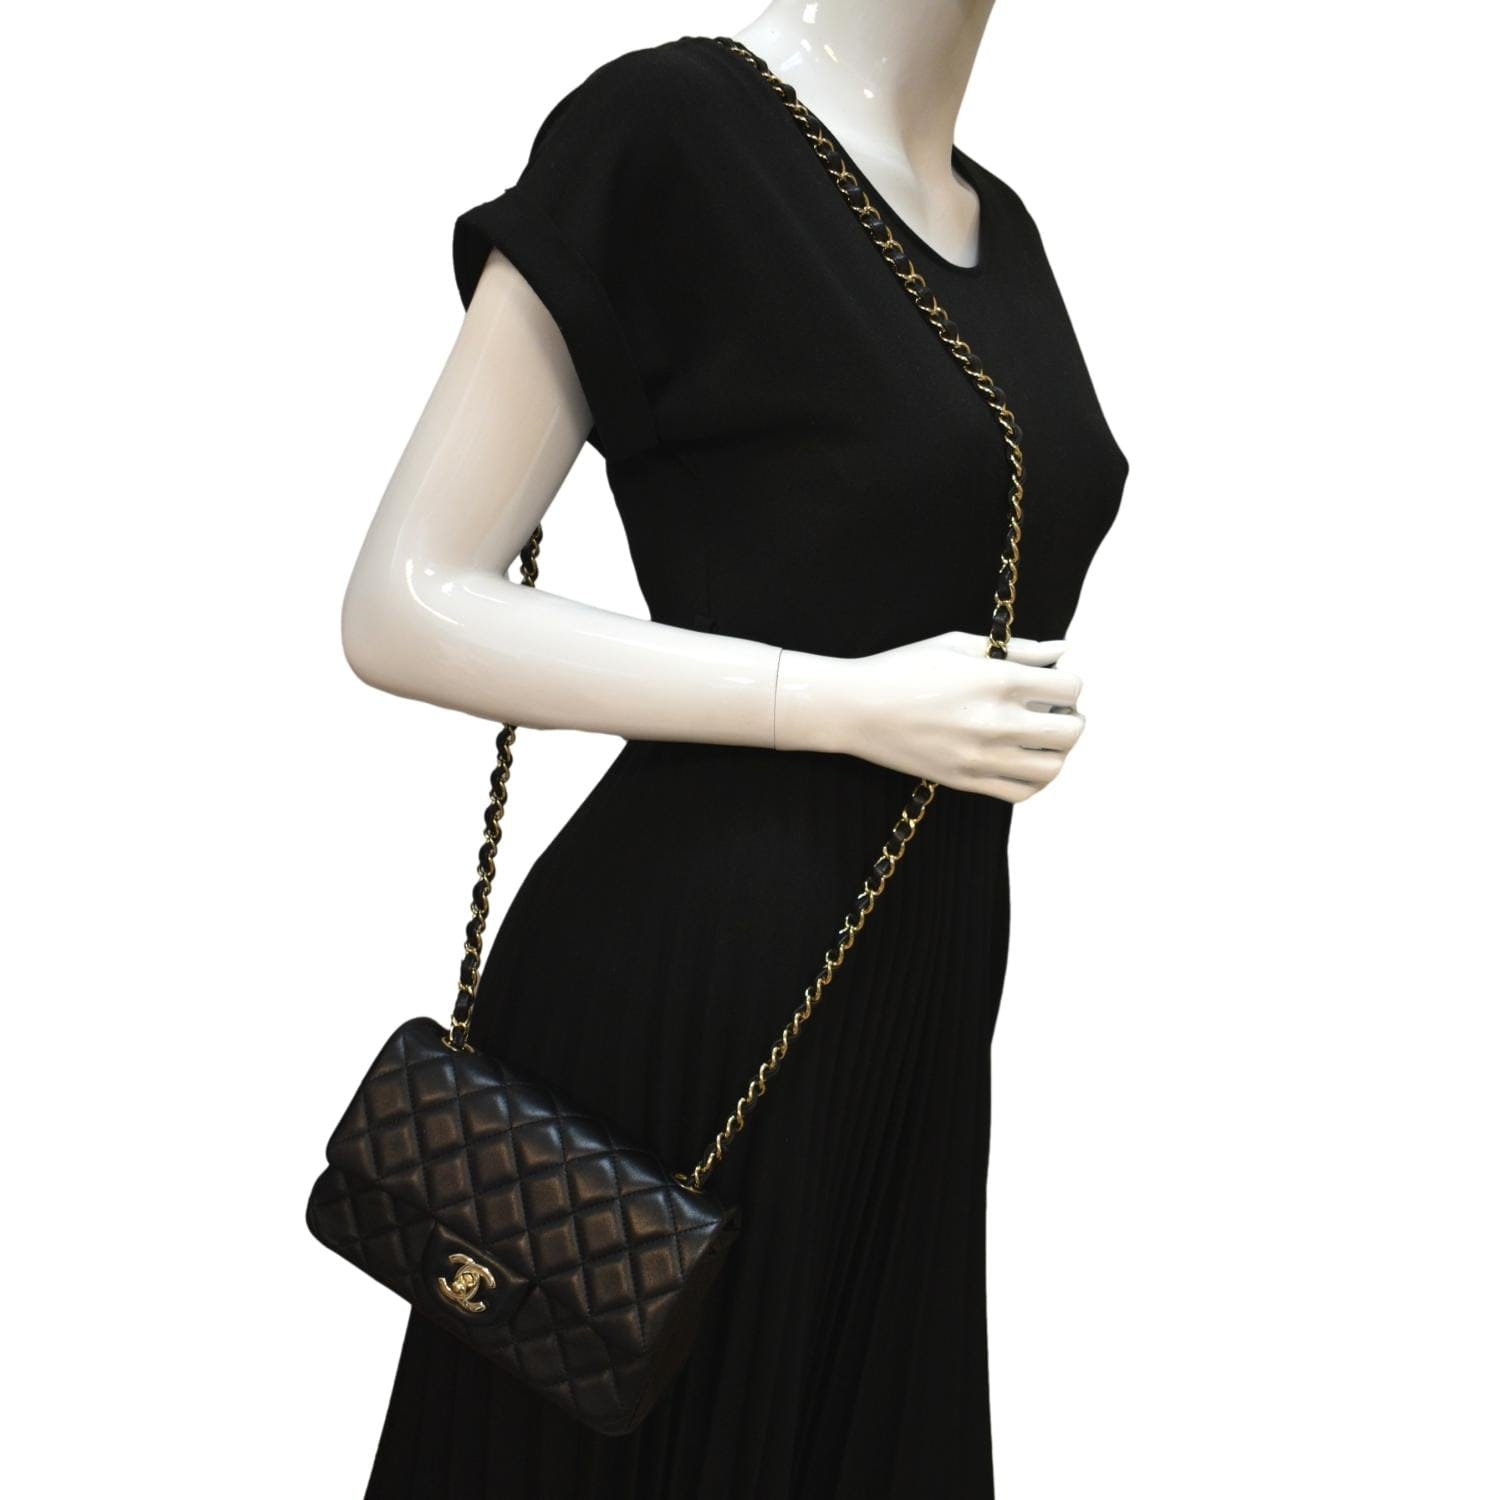 Chanel Mini Rectangular Flap Shoulder Bag